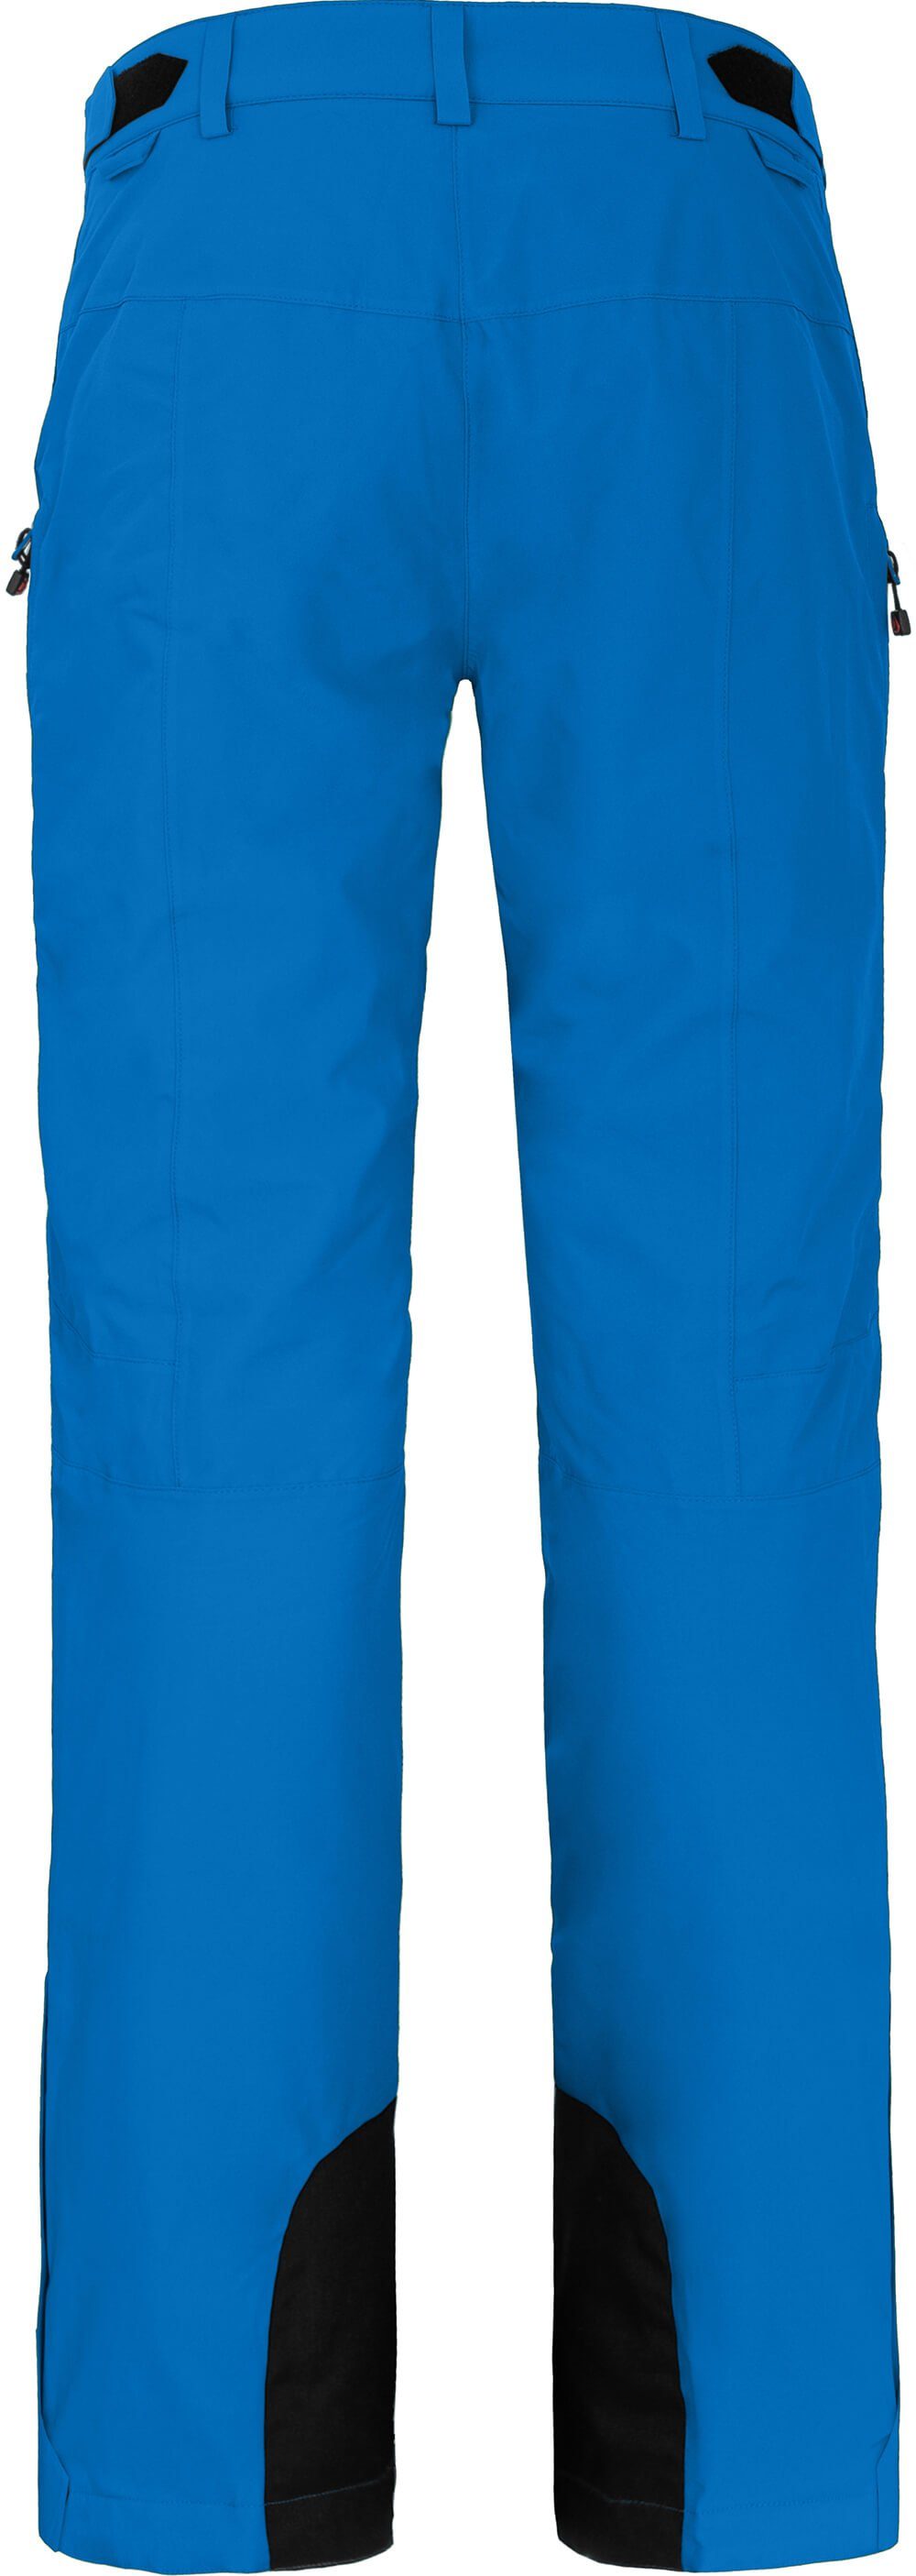 Bergson Skihose ICE Damen wattiert, blau Skihose, 20000 Wassersäule, Kurzgrößen, mm